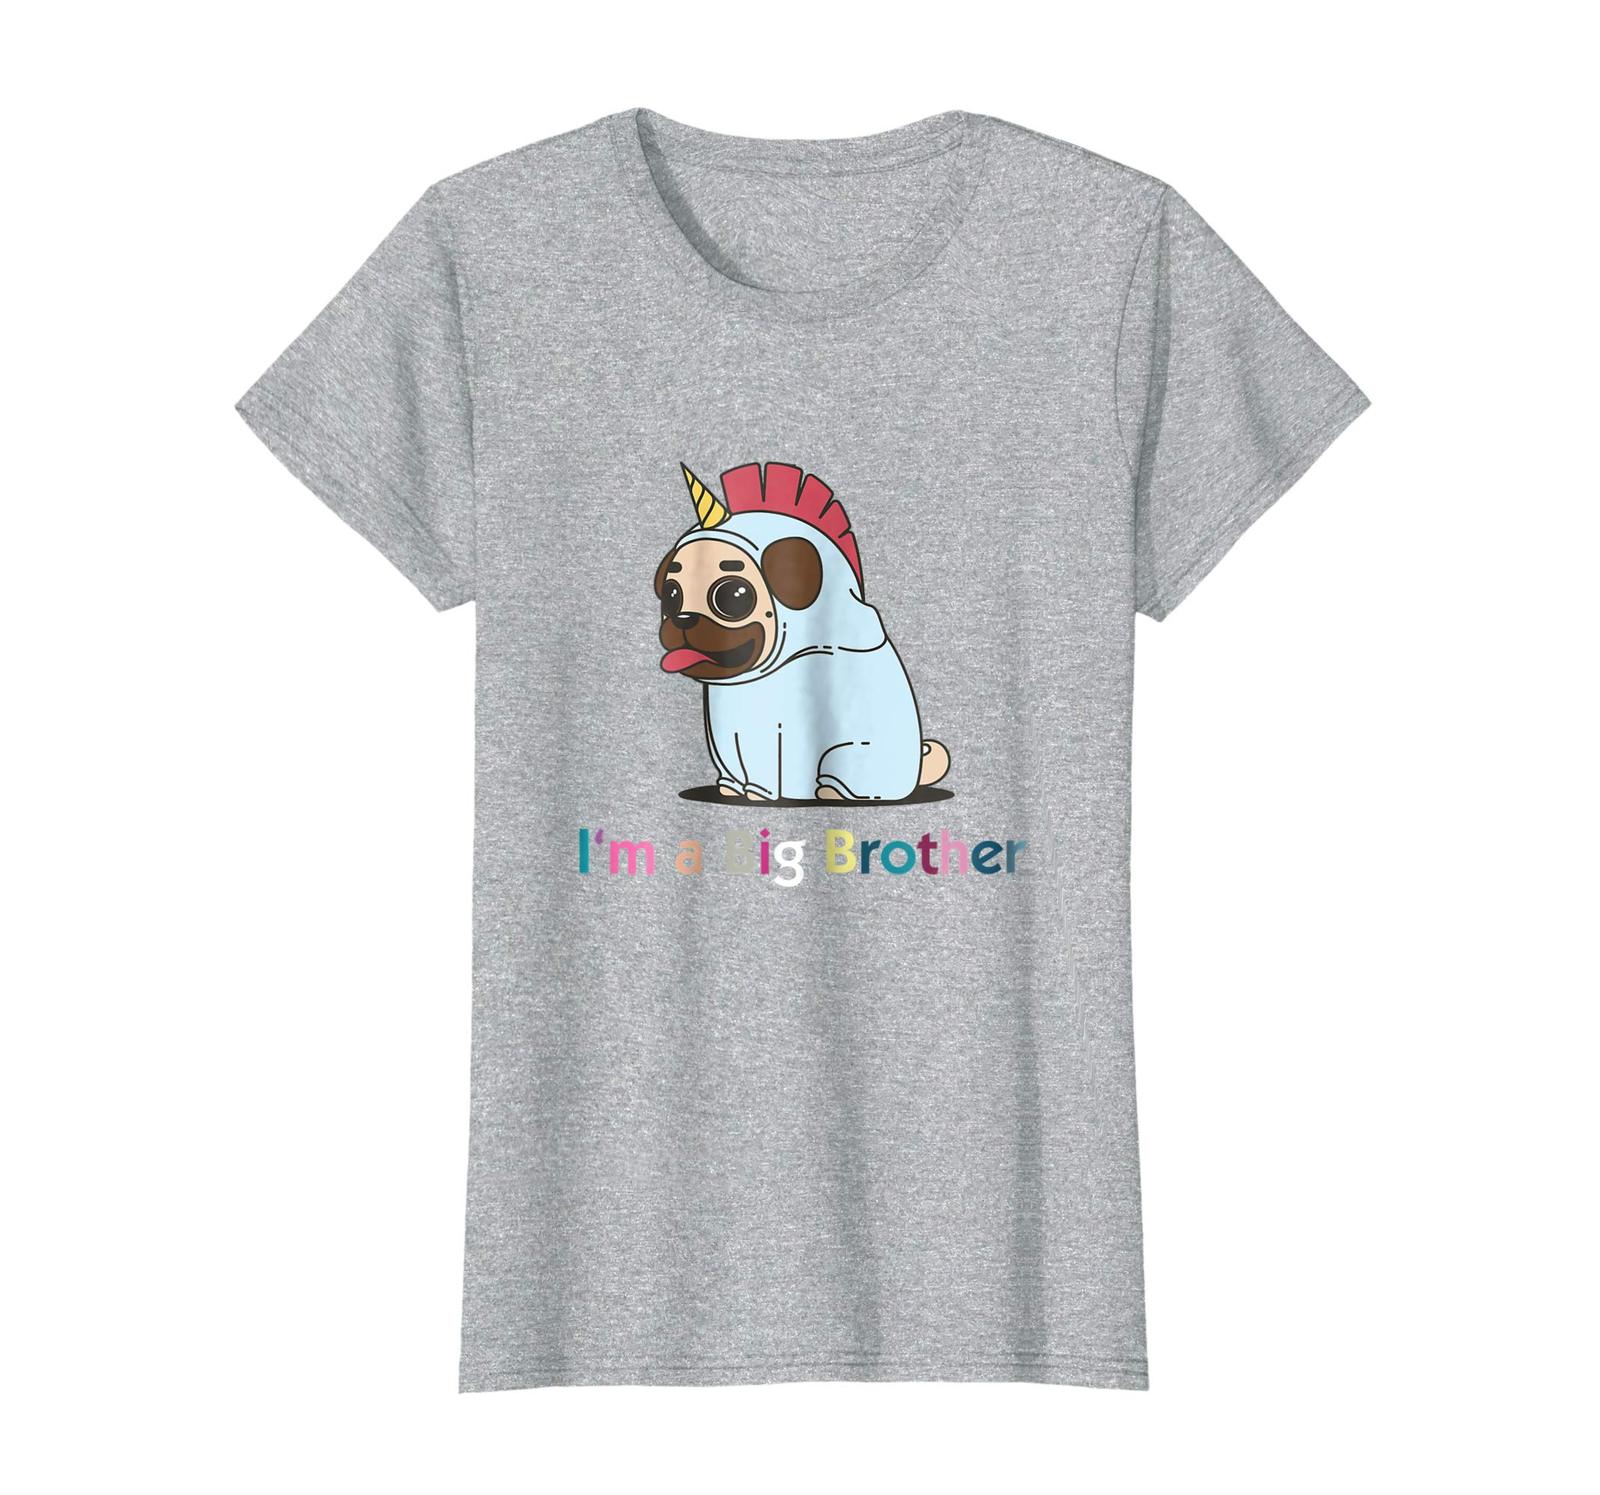 Dog Fashion - Pug Tshirt with Unicorn Uniform Funny Cute T-shirt Wowen